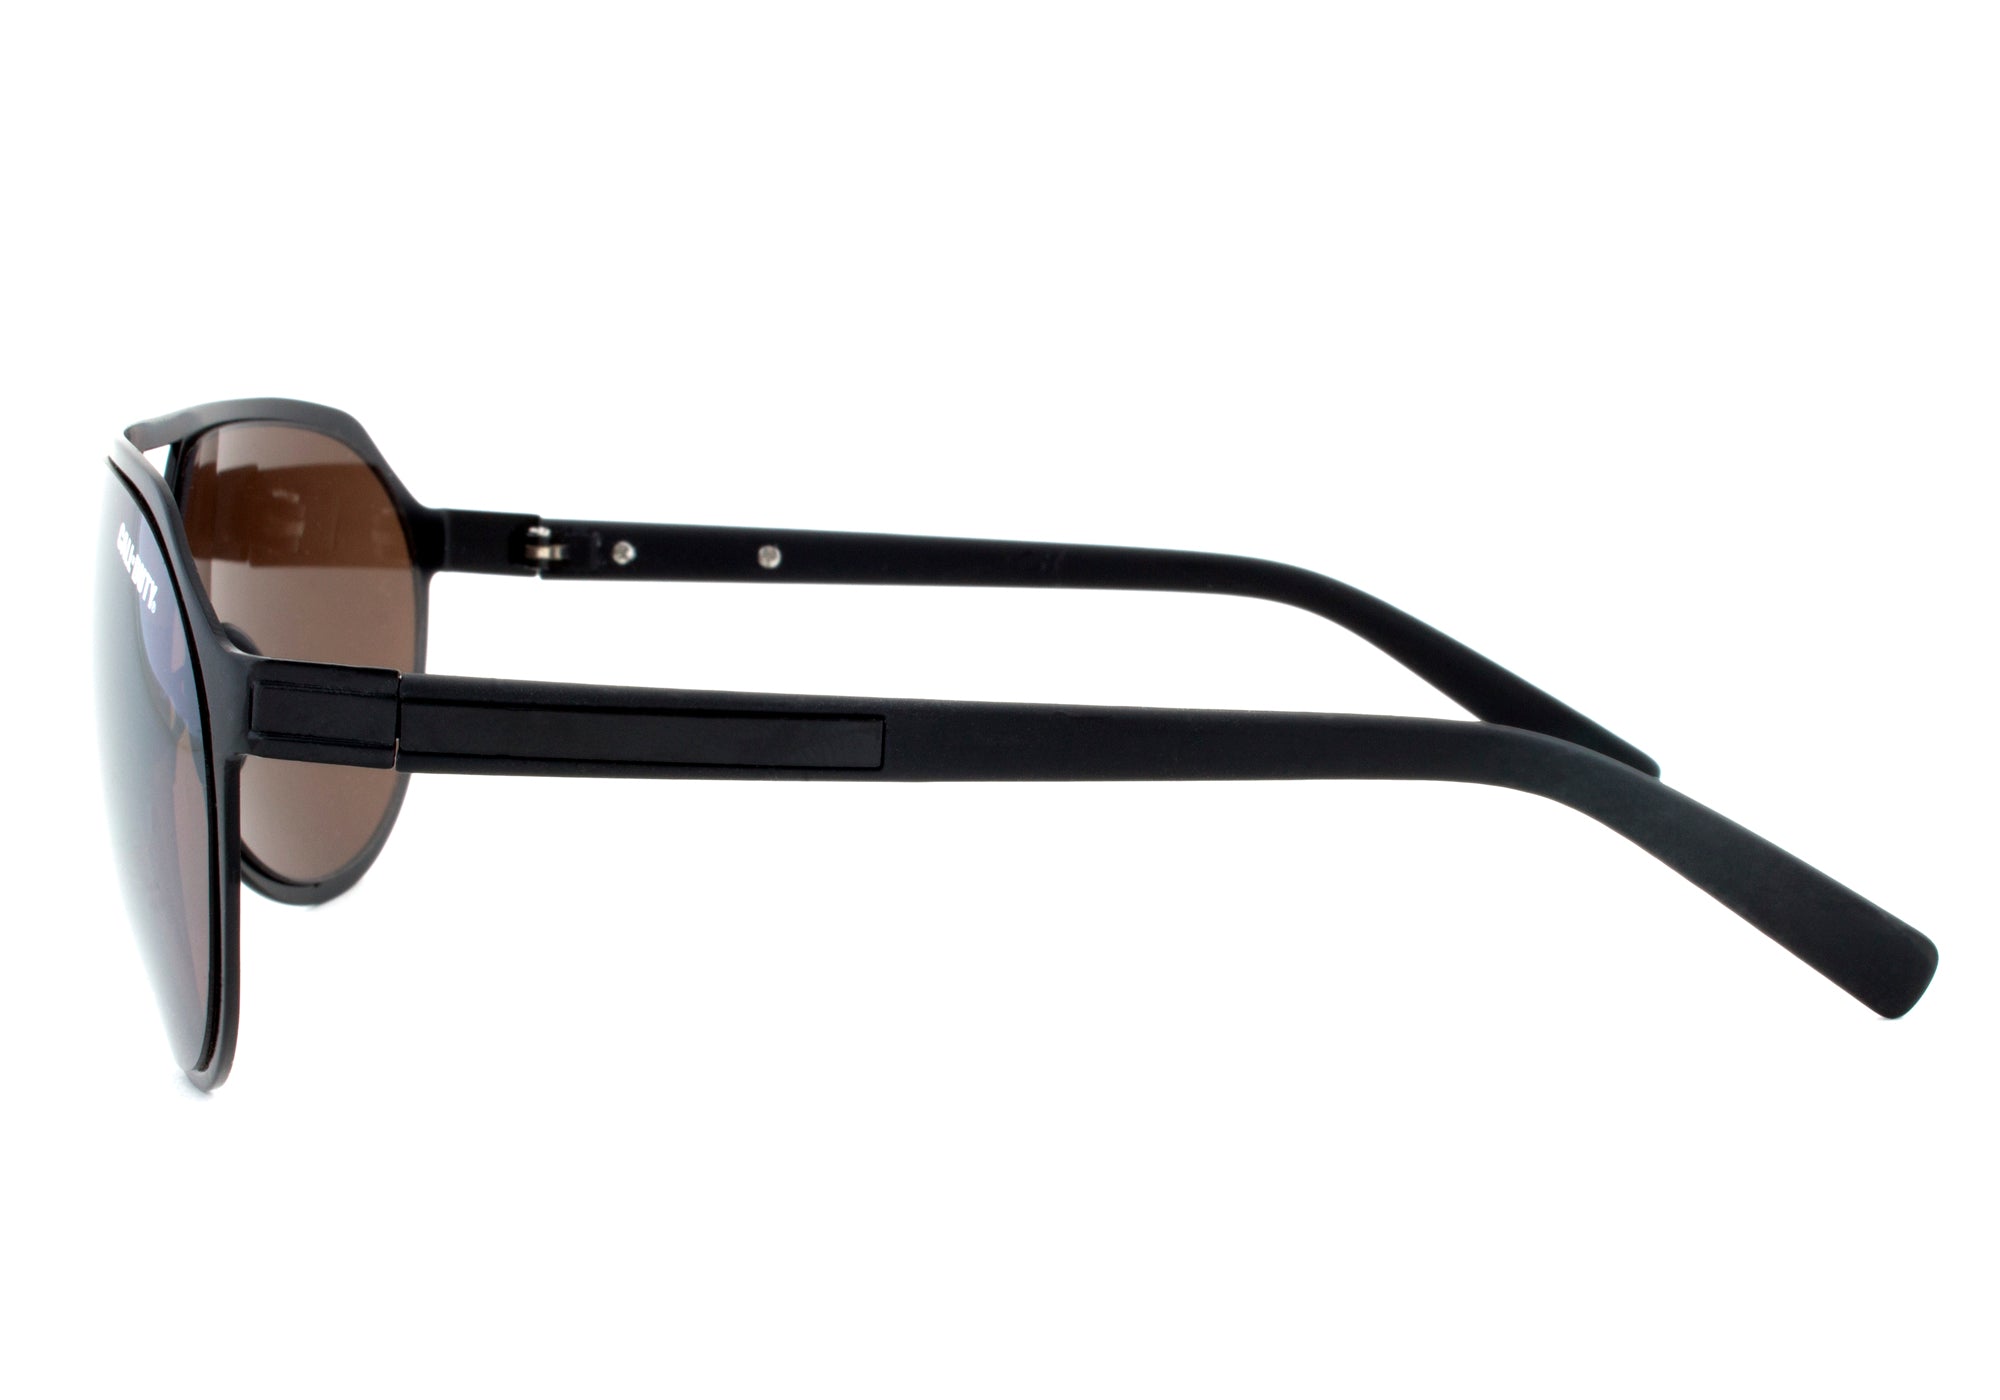 Call of Duty Black Aviator Sunglasses with Copper Contrast Sun Lens